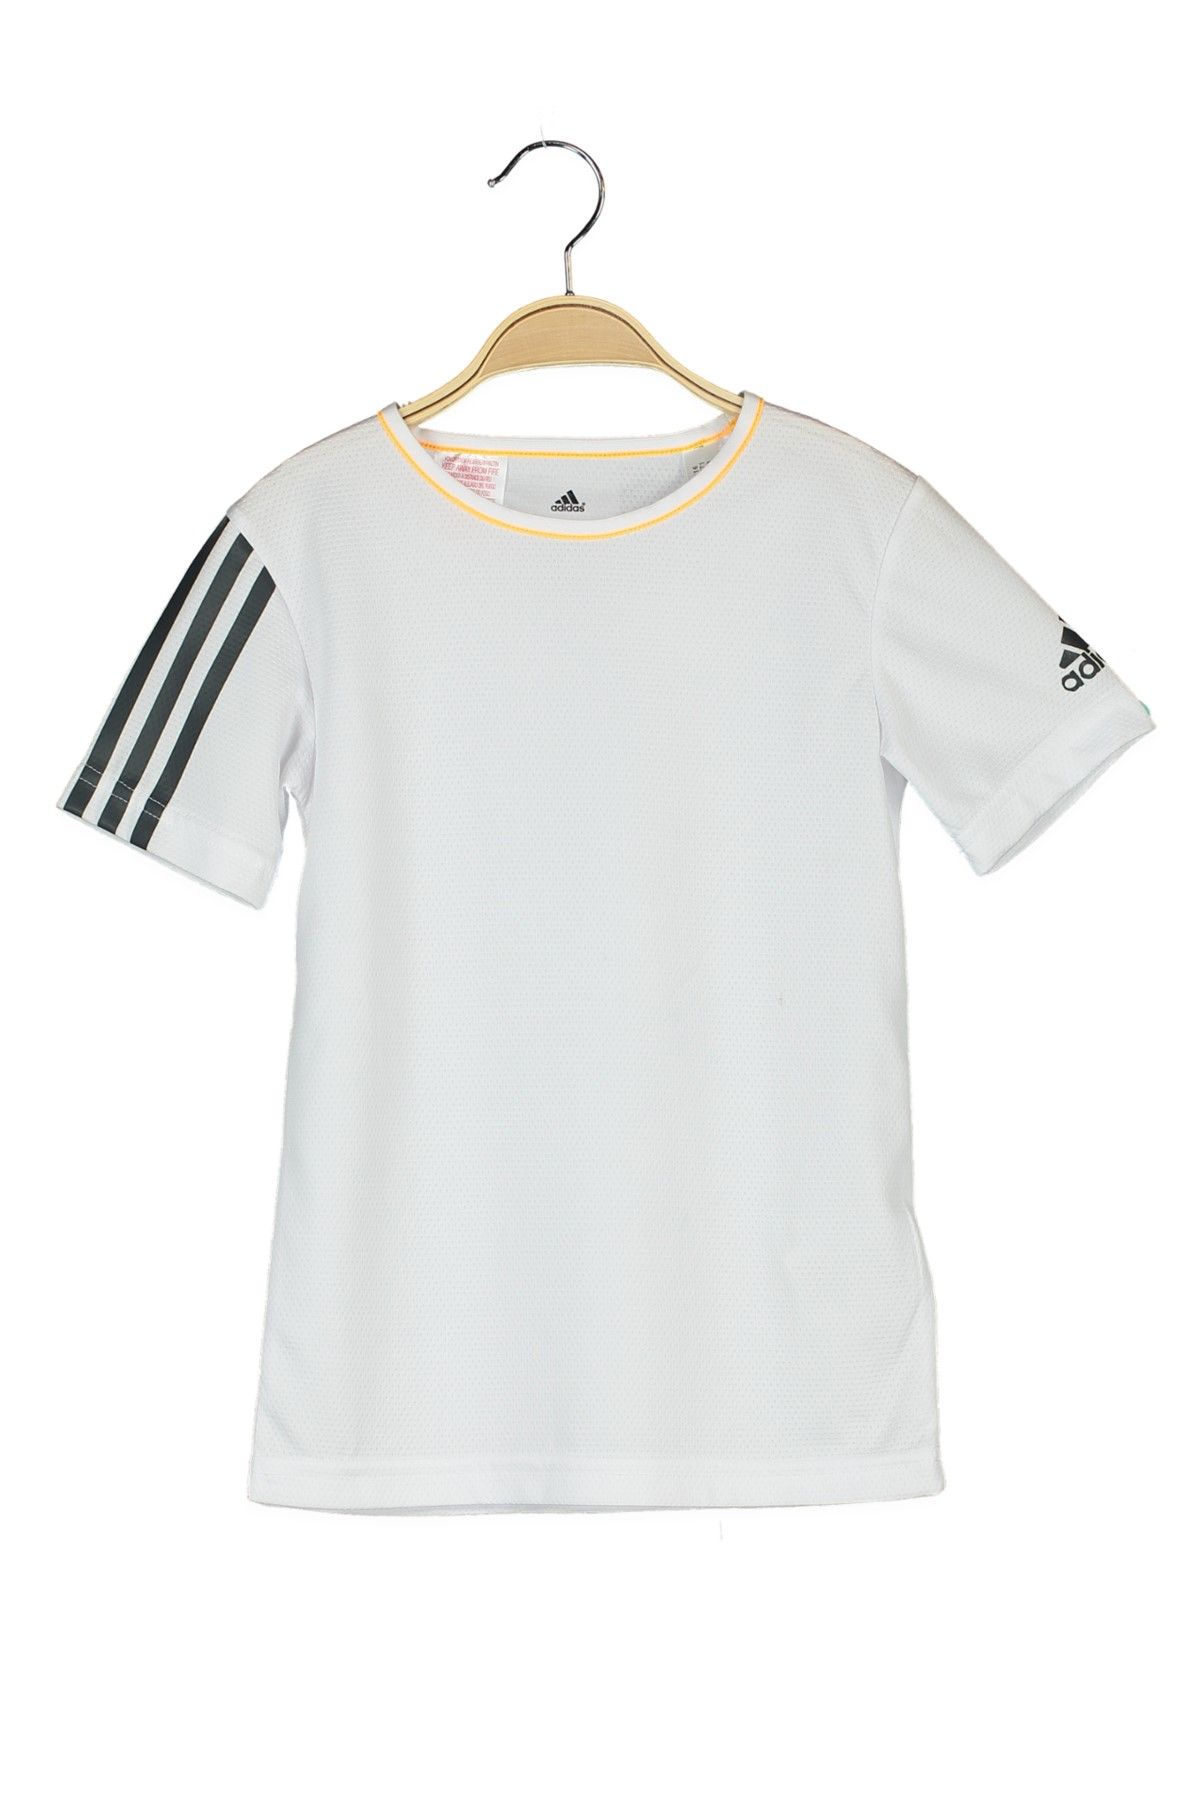 adidas Beyaz Unisex Çocuk T-shirt AK2571